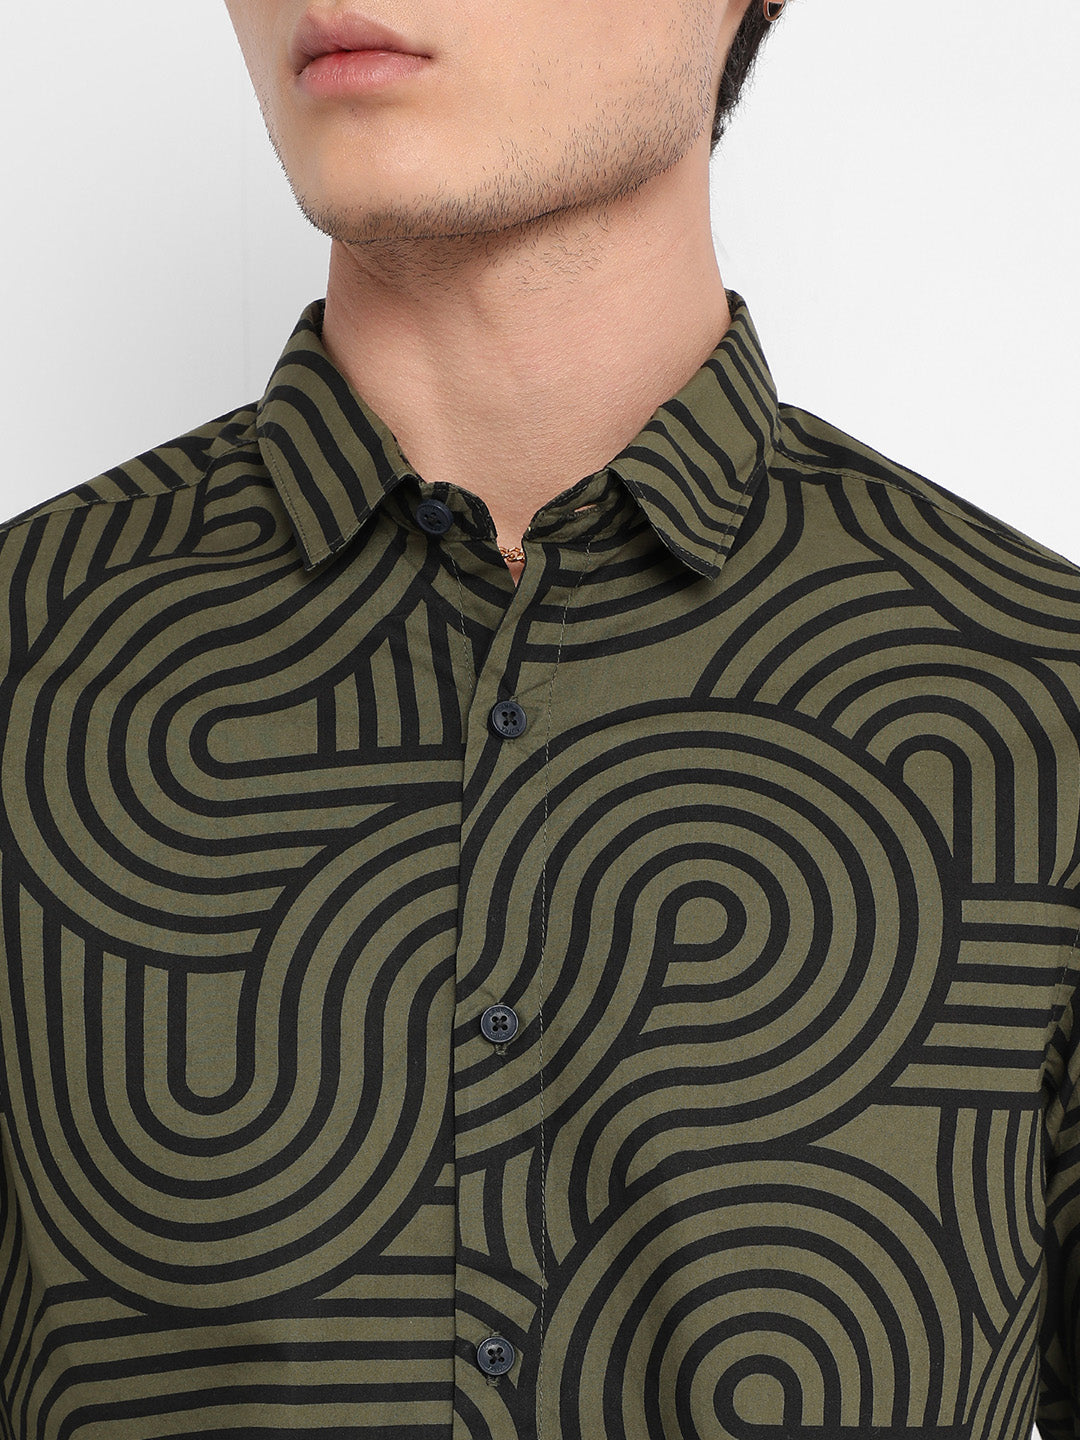 Men's Olive Green Parallel Swirl Shirt